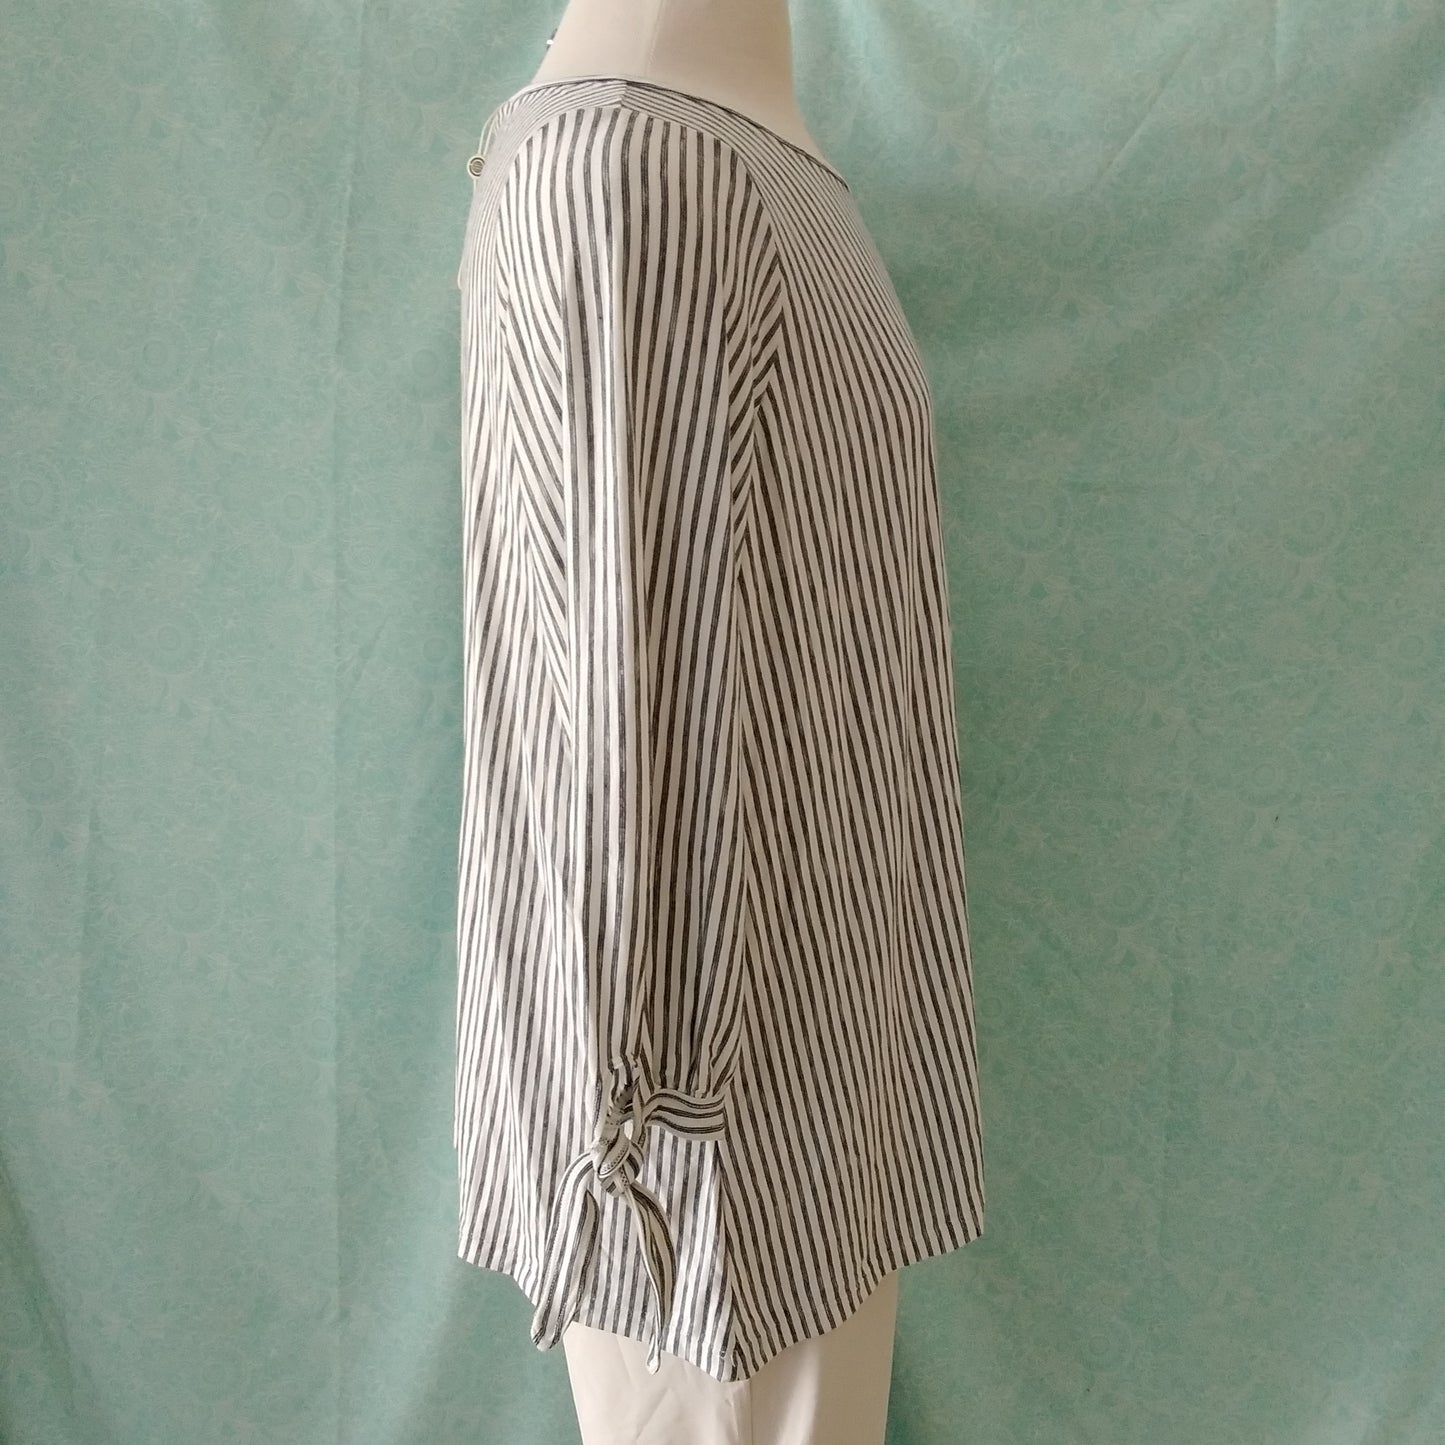 NWT - Max Studio Black White Stripe 3/4 Sleeve Shirt - 1X